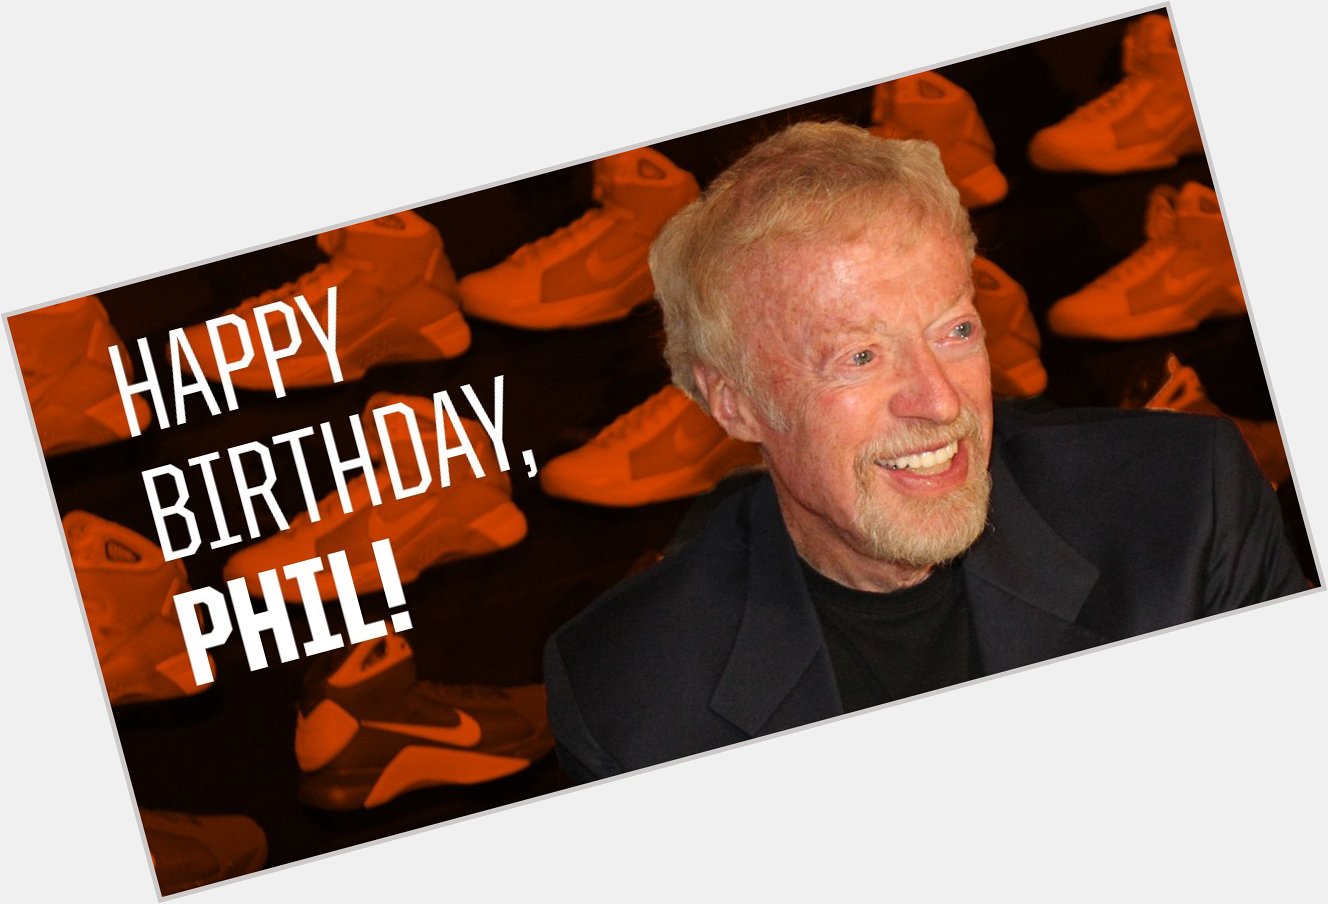 Happy birthday, Phil Knight!

Who\s ready to celebrate in November? 